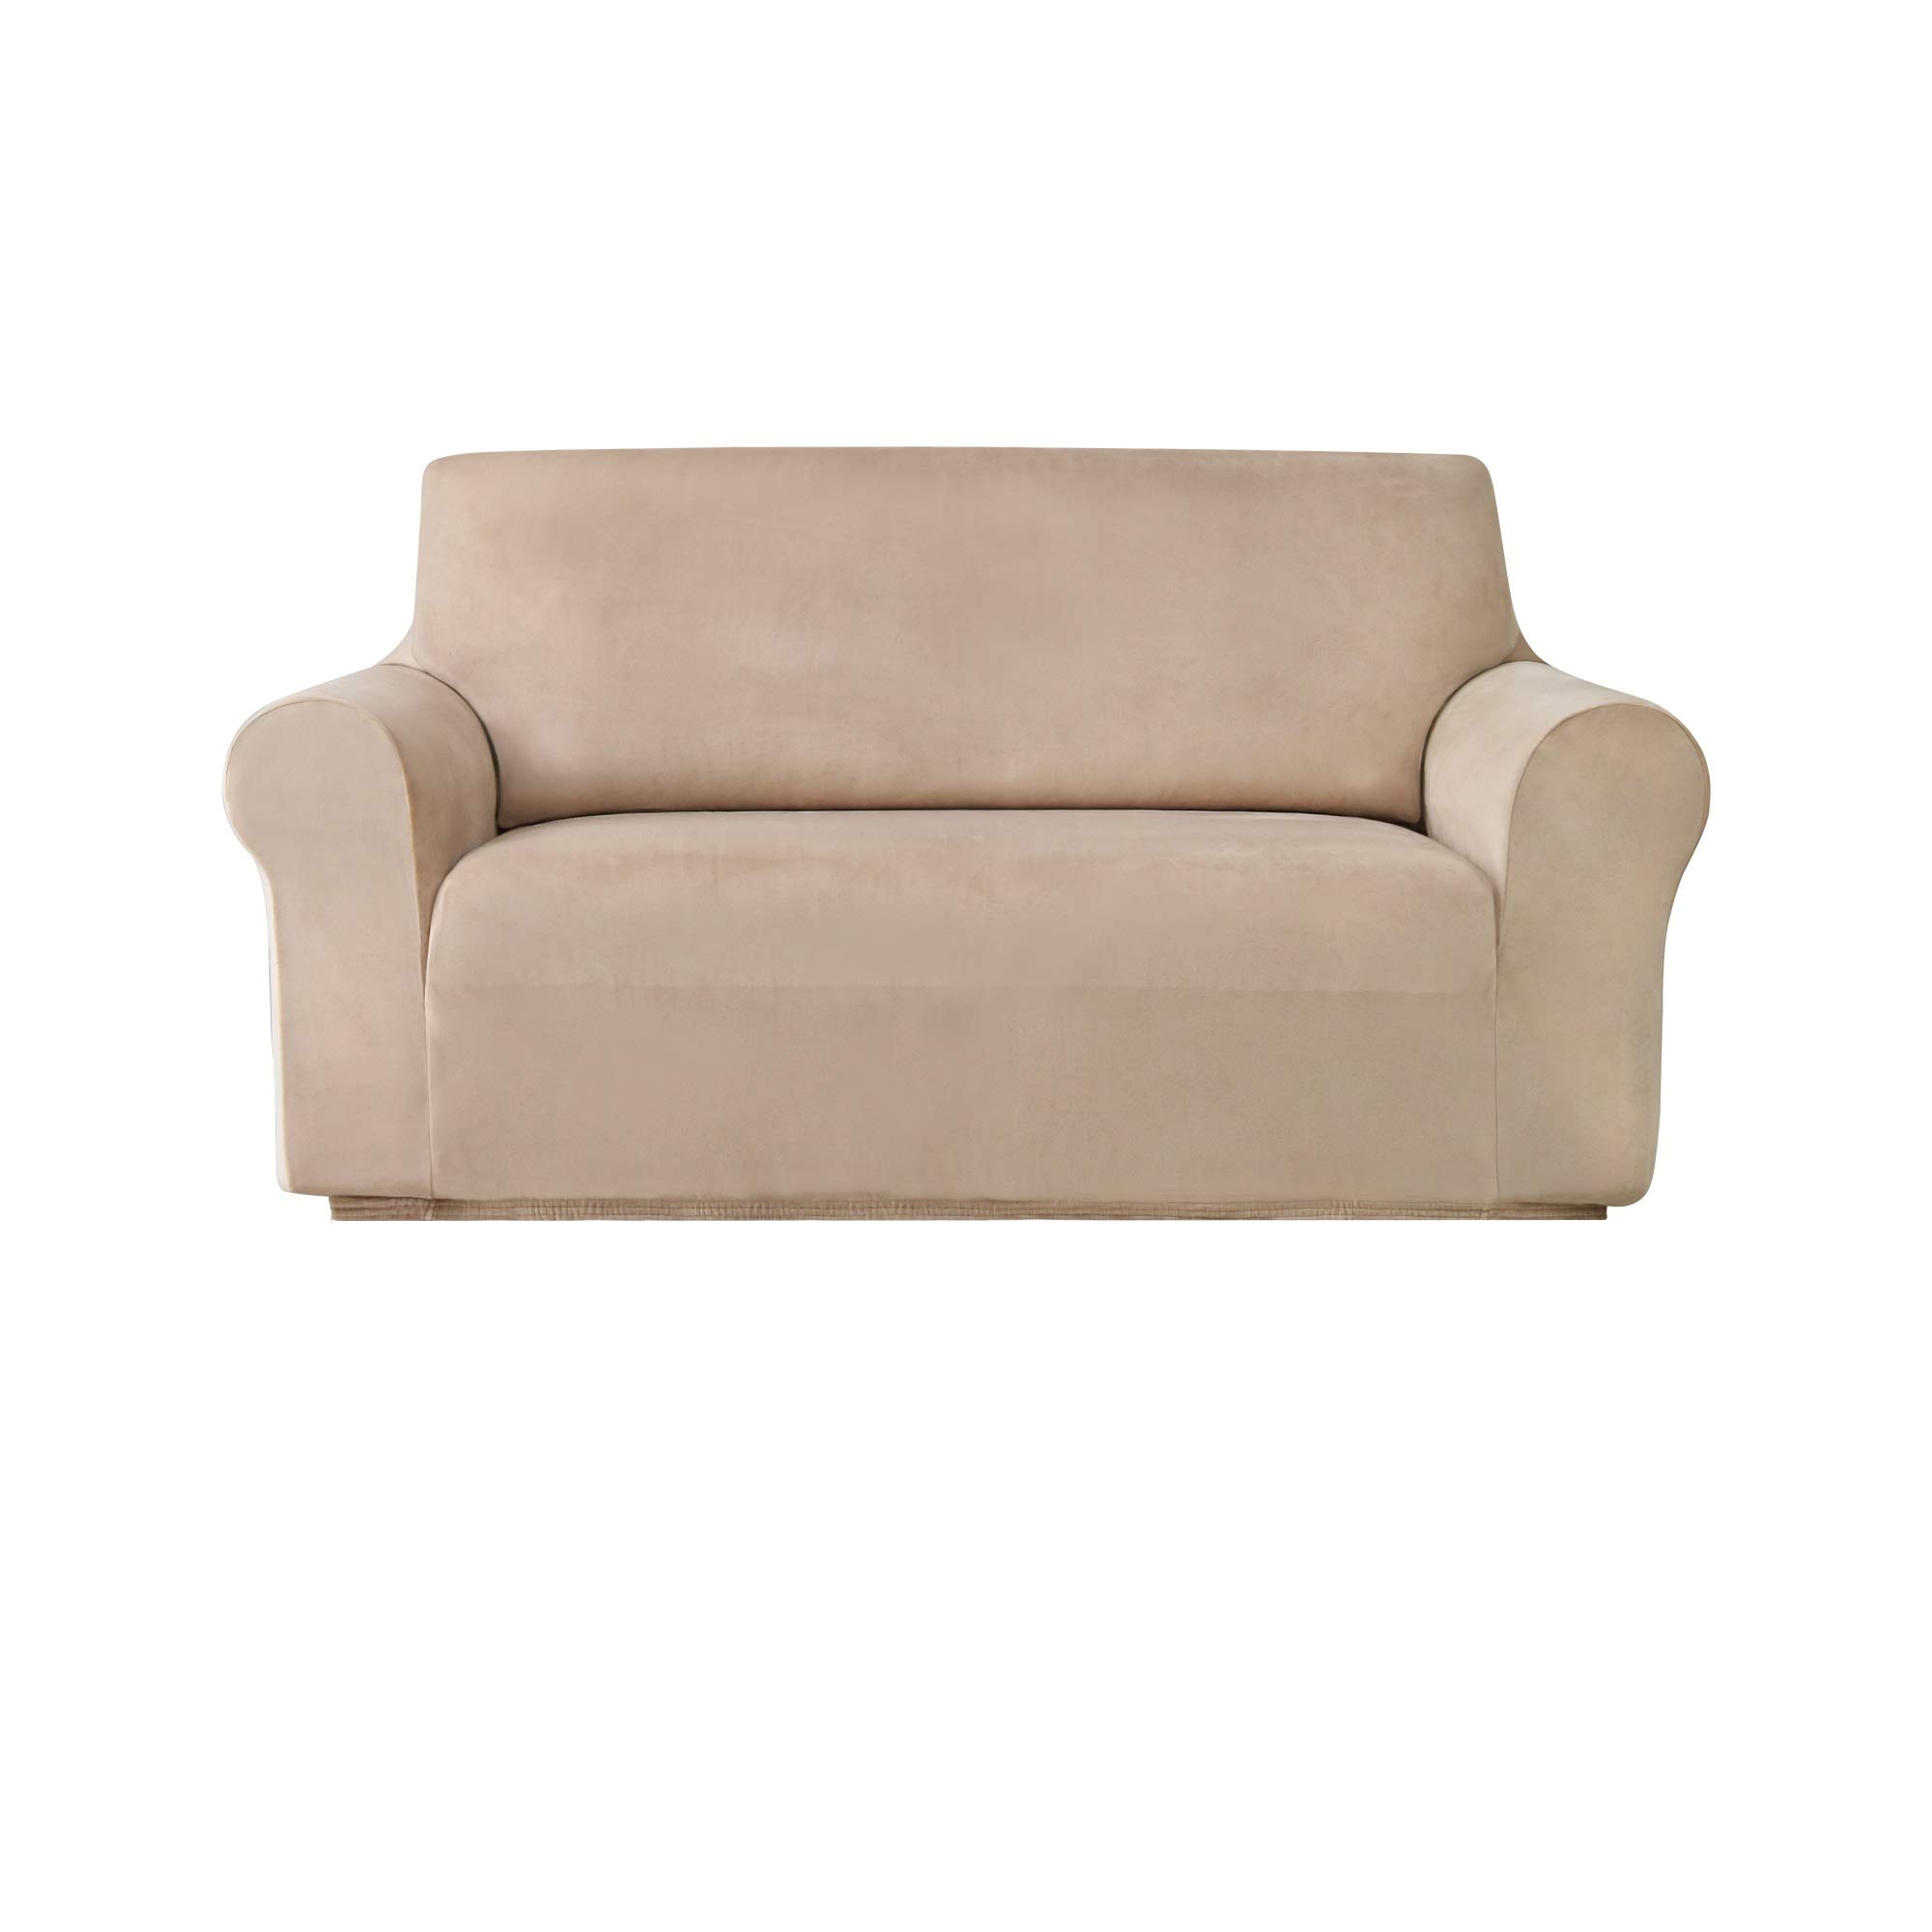 maxmill Velvet Loveseat Slipcover 1 Pc Stretch Spandex Sofa Couch Slipcover for Living Room Chair Slipcover with Elastic Bottom Furniture Protector...